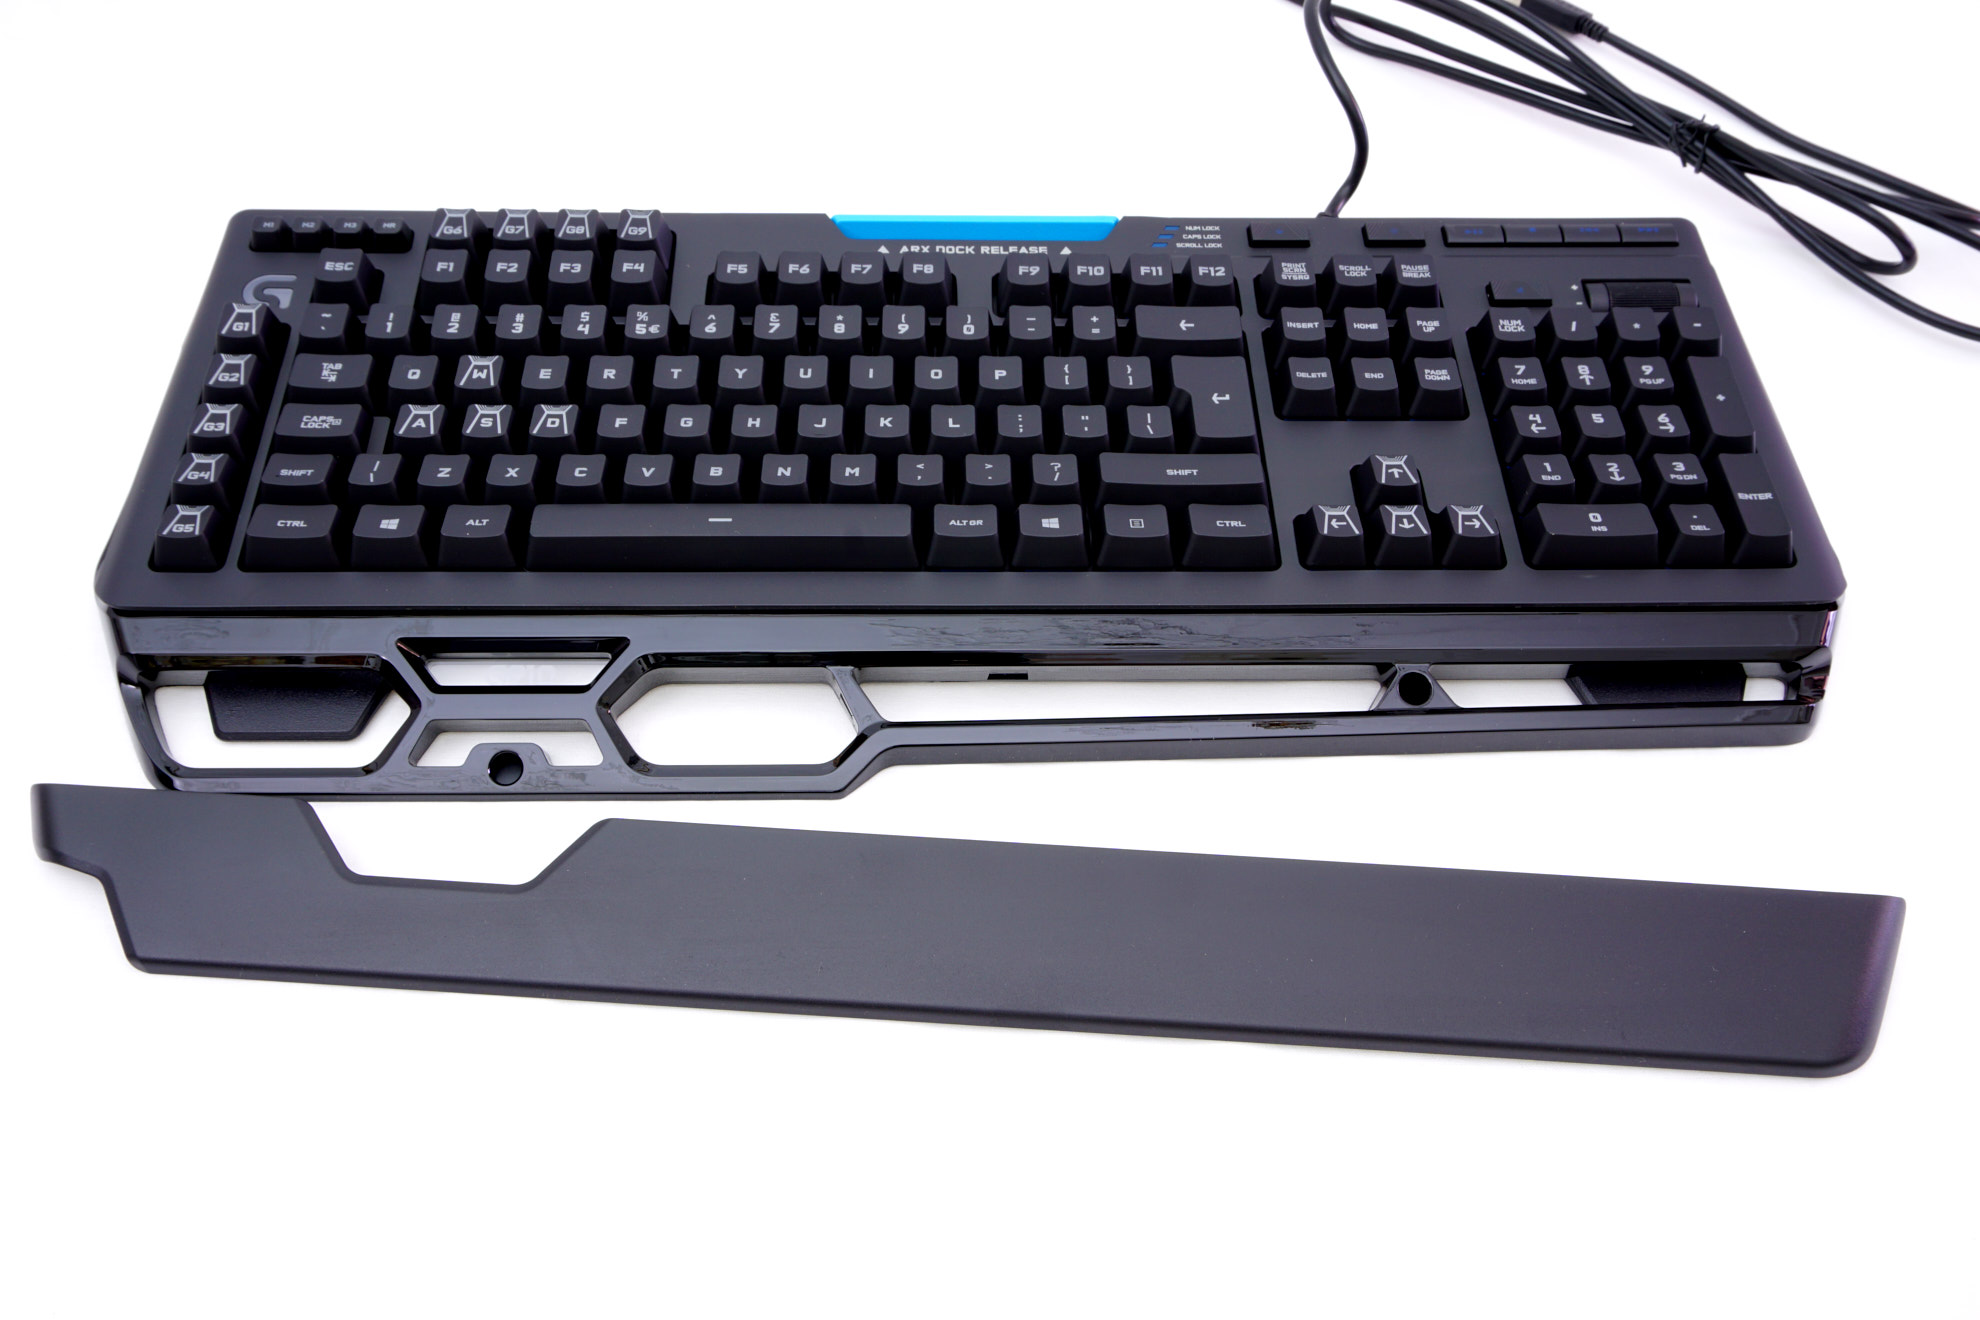 The Logitech Spectrum Mechanical Gaming Keyboard - The Logitech G910 Orion Mechanical Keyboard Review